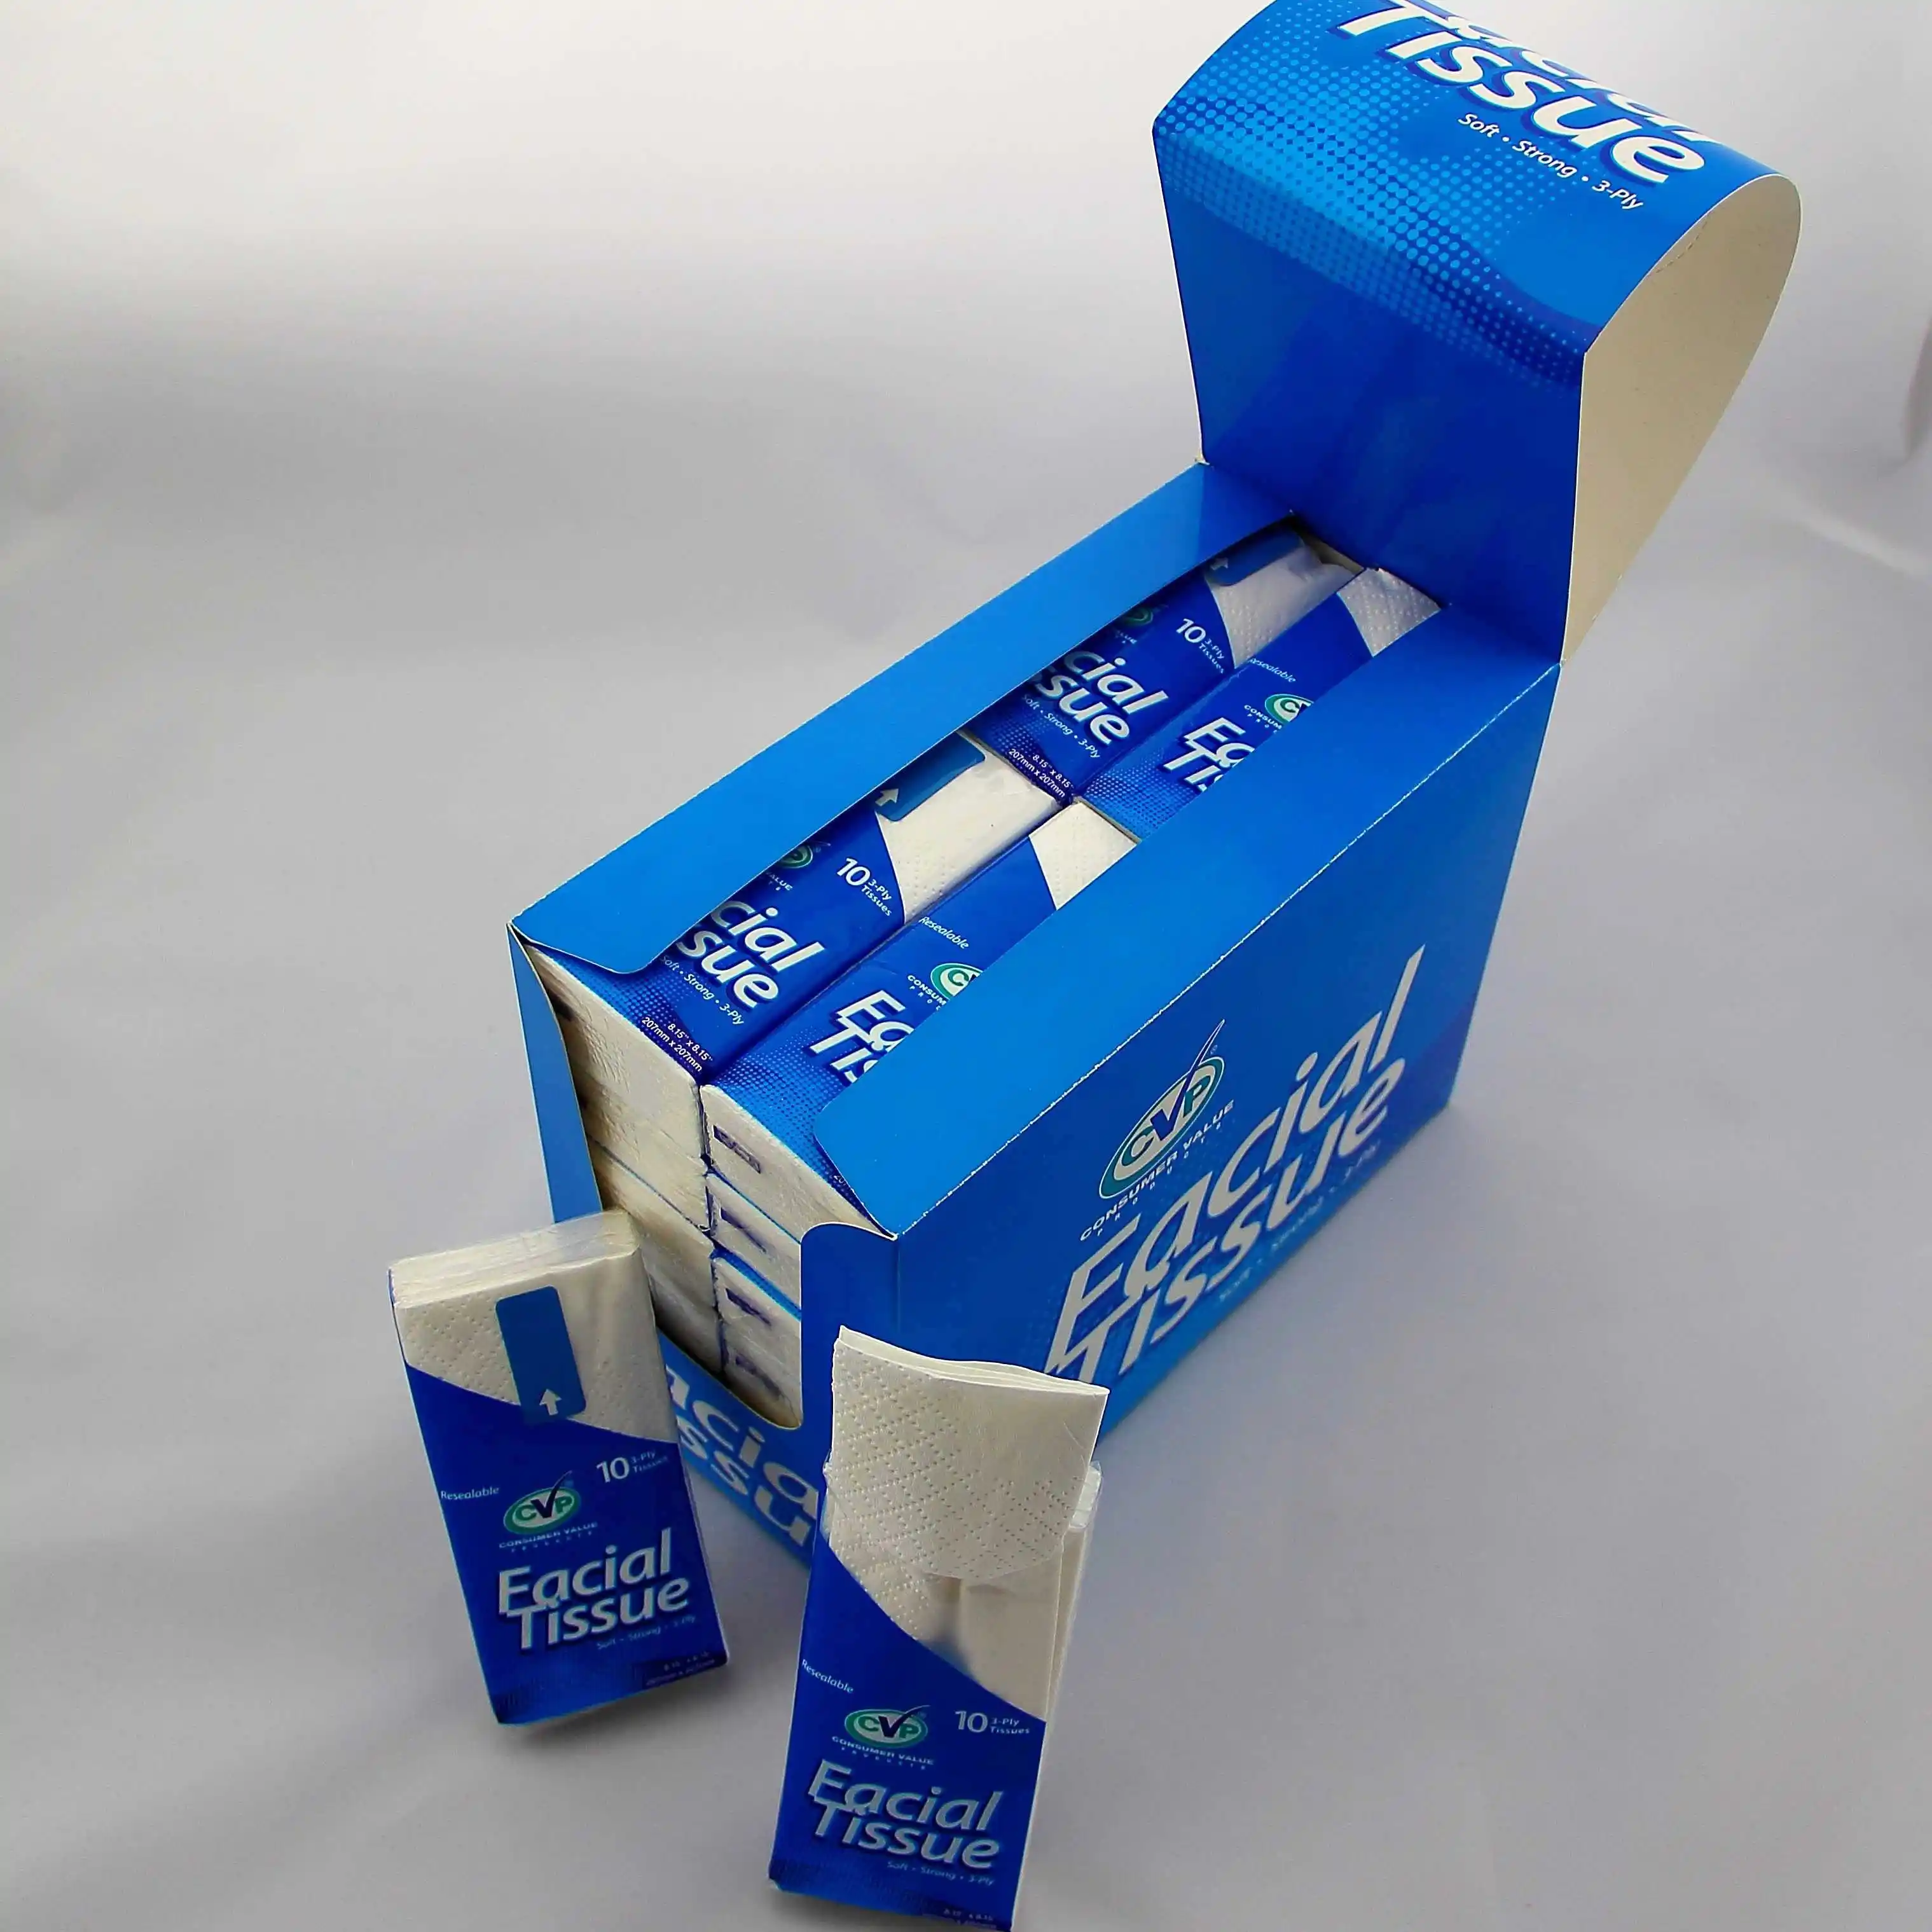 Paper tissue Pocket handkerchief in display box